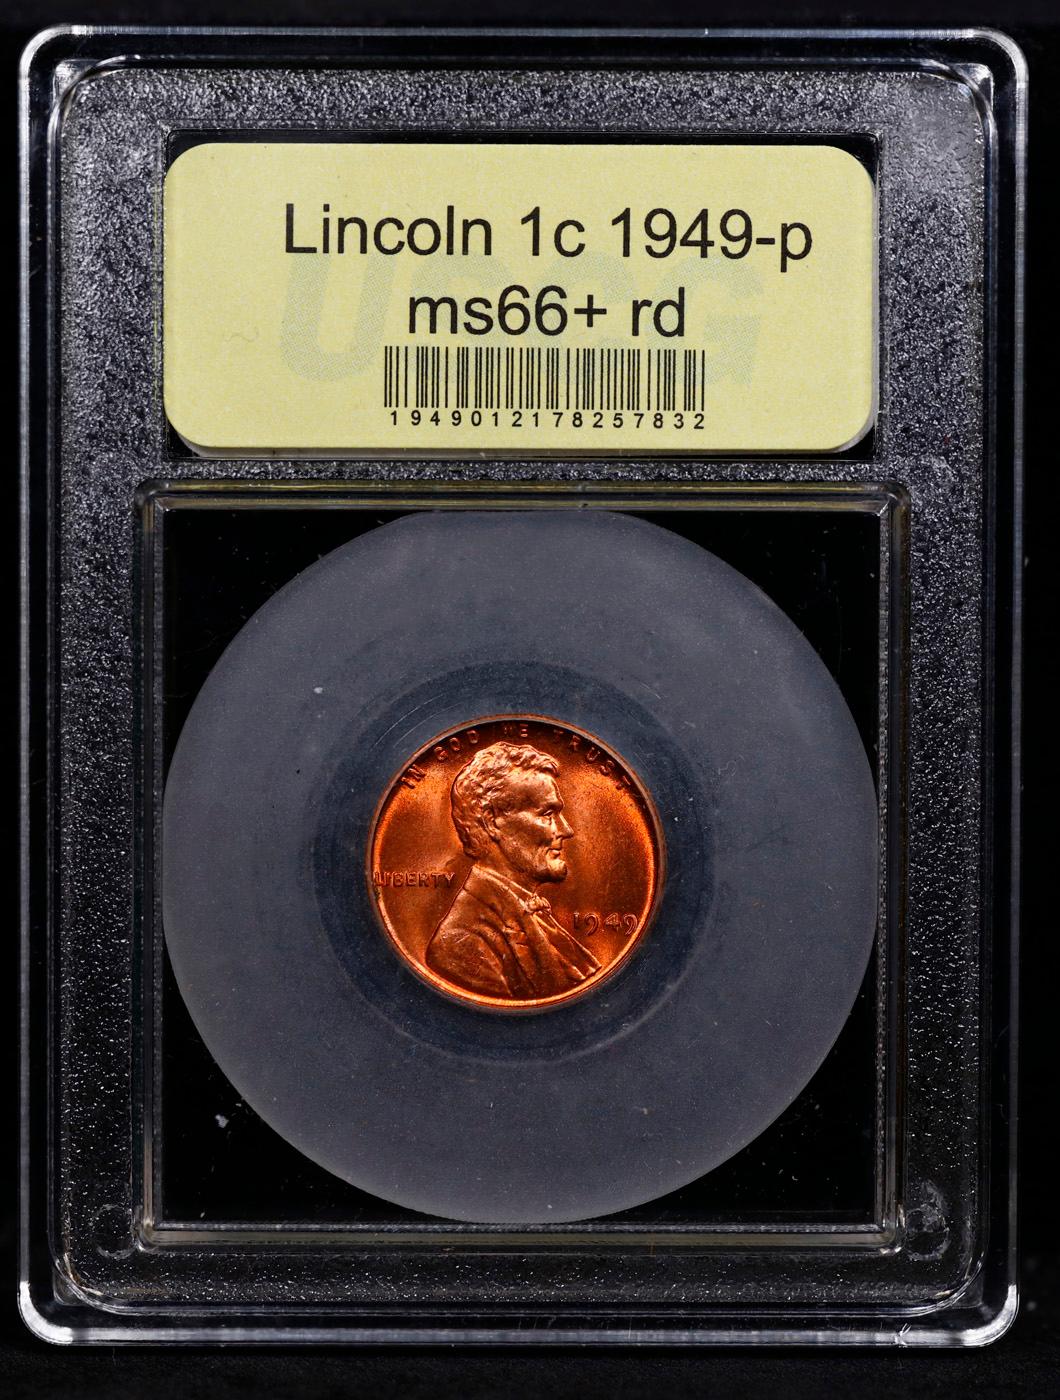 ***Auction Highlight*** 1949-p Lincoln Cent 1c Grades GEM++ RD (fc)